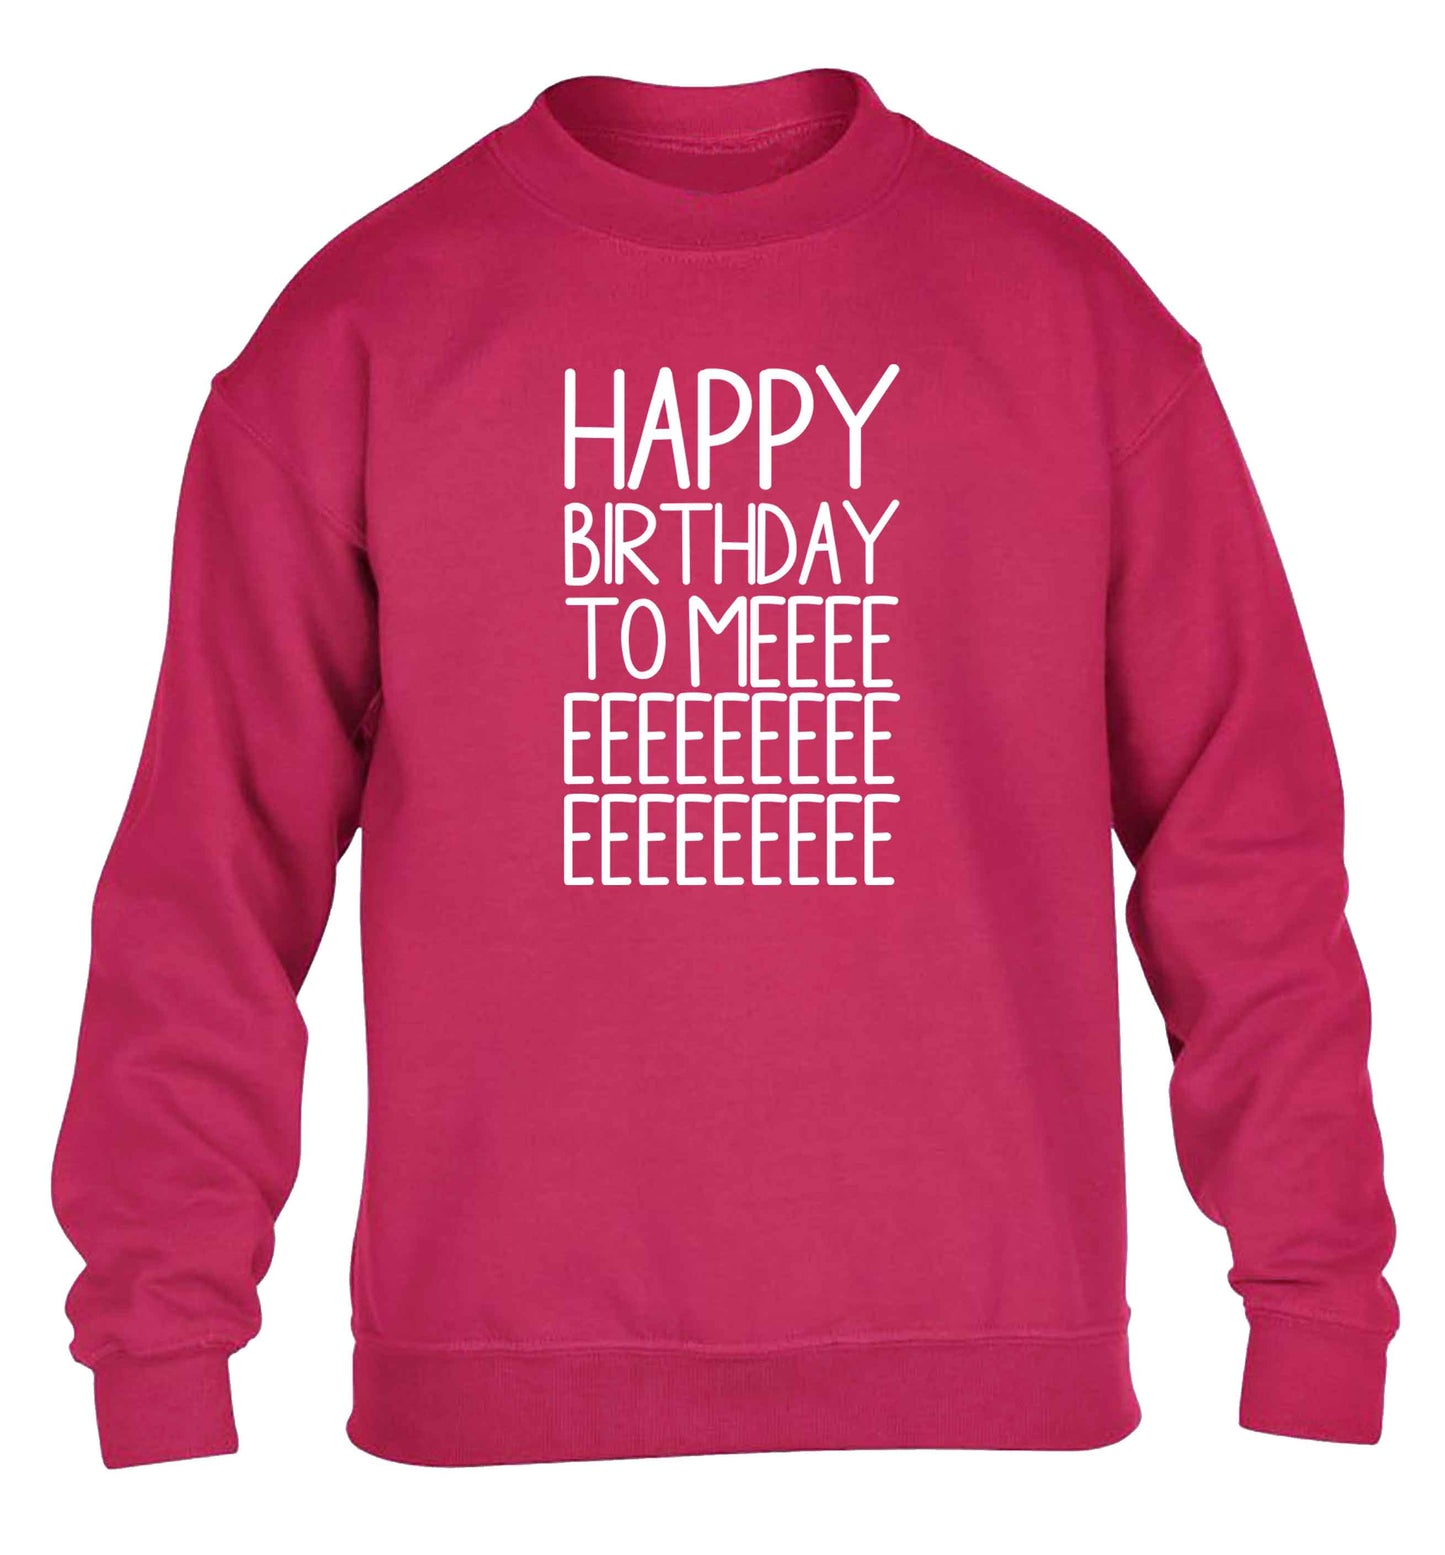 Happy birthday to me children's pink sweater 12-13 Years